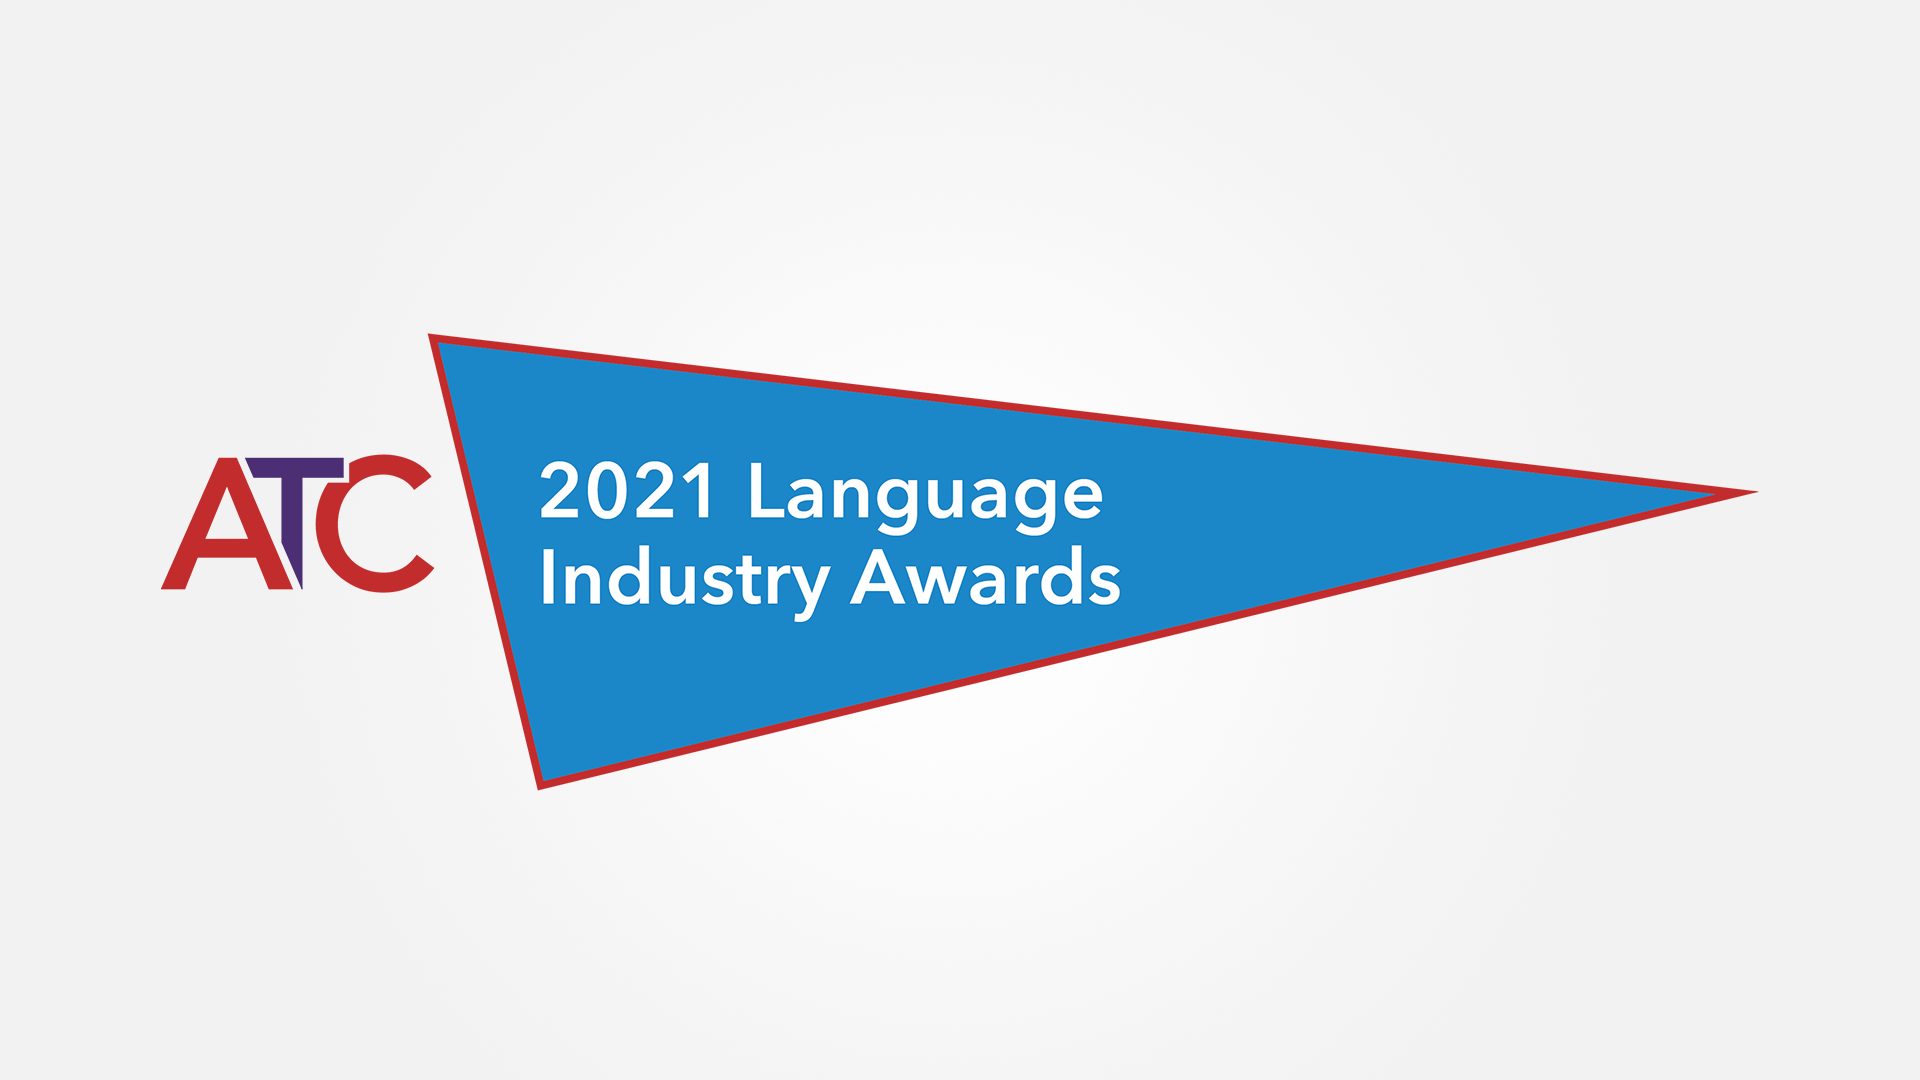 Winners of ATC Language Industry Awards 2021